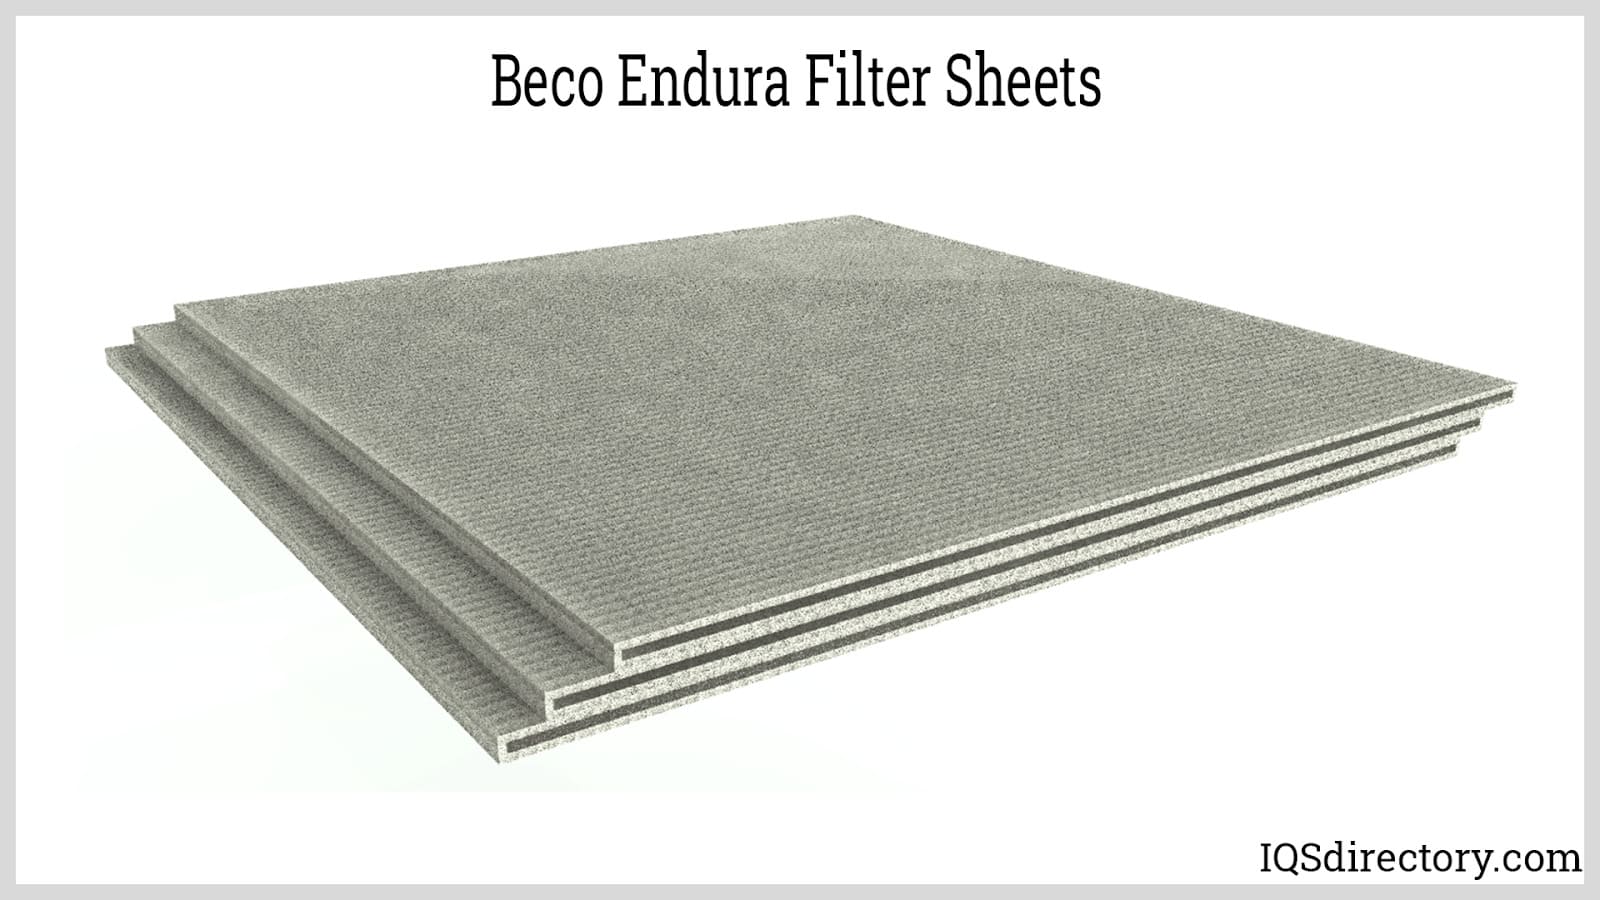 Beco Endura Filter Sheets